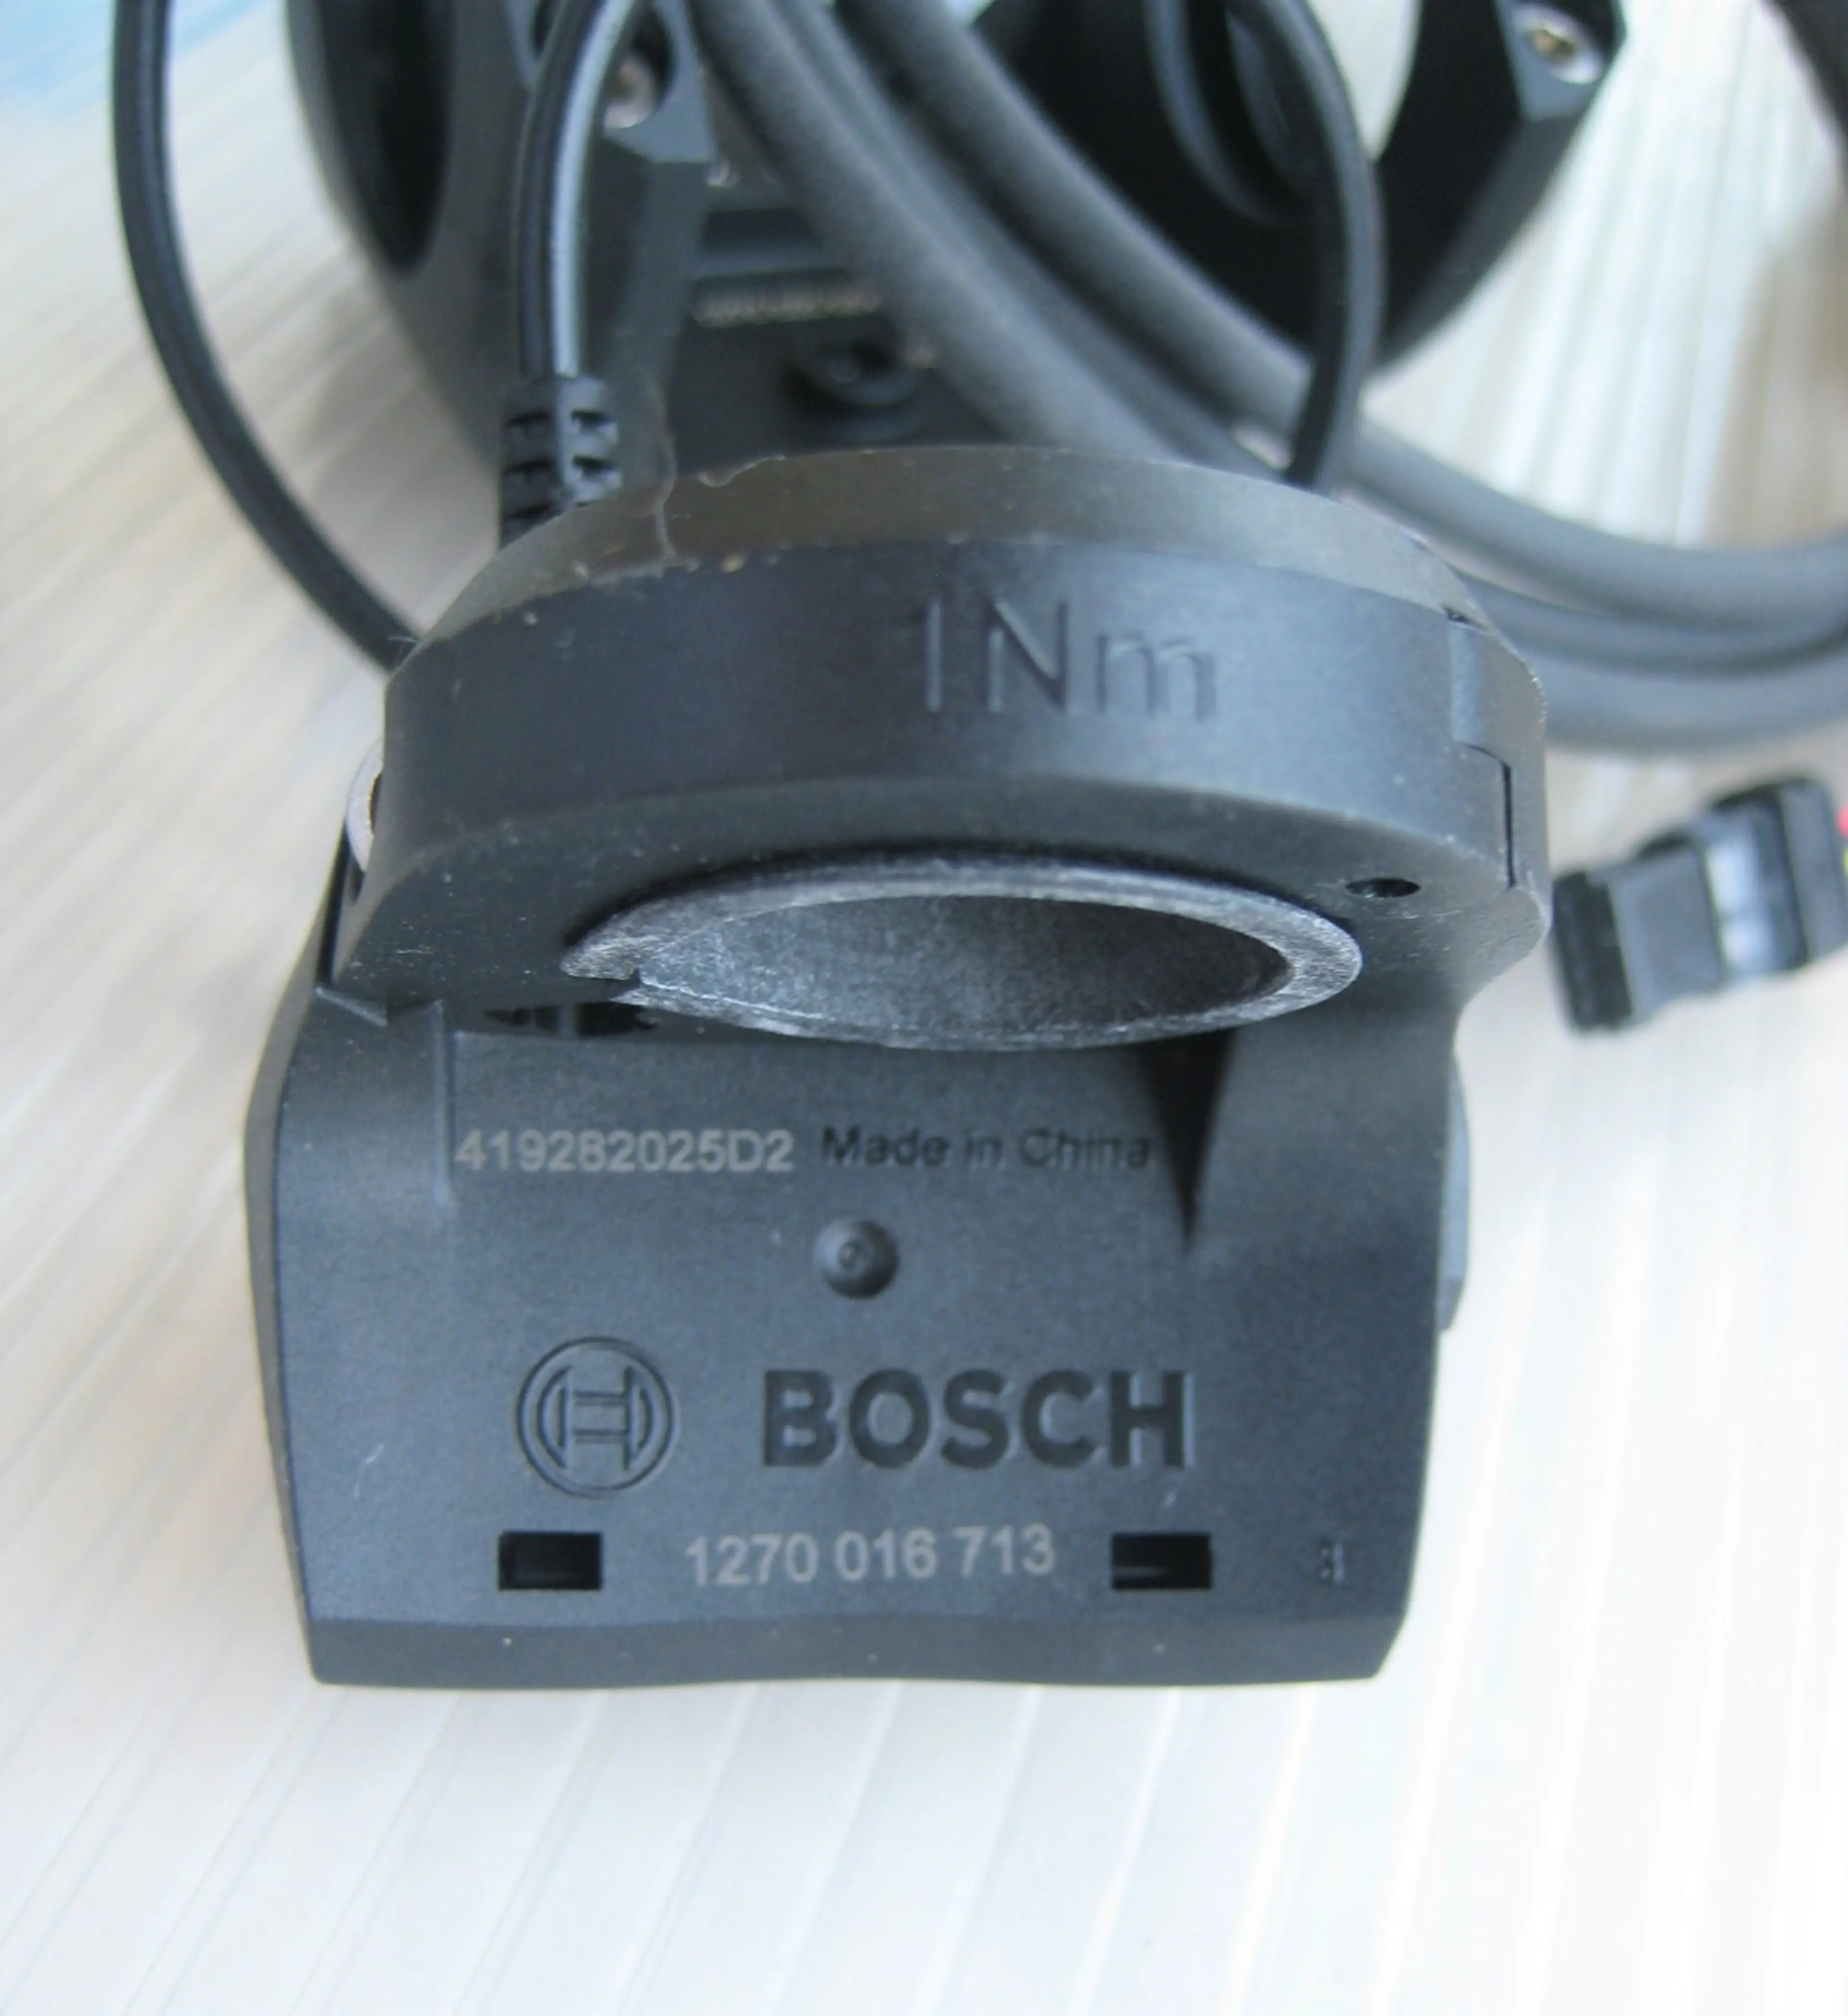 Image Set Bosch Intuvia Display + Consola, noi